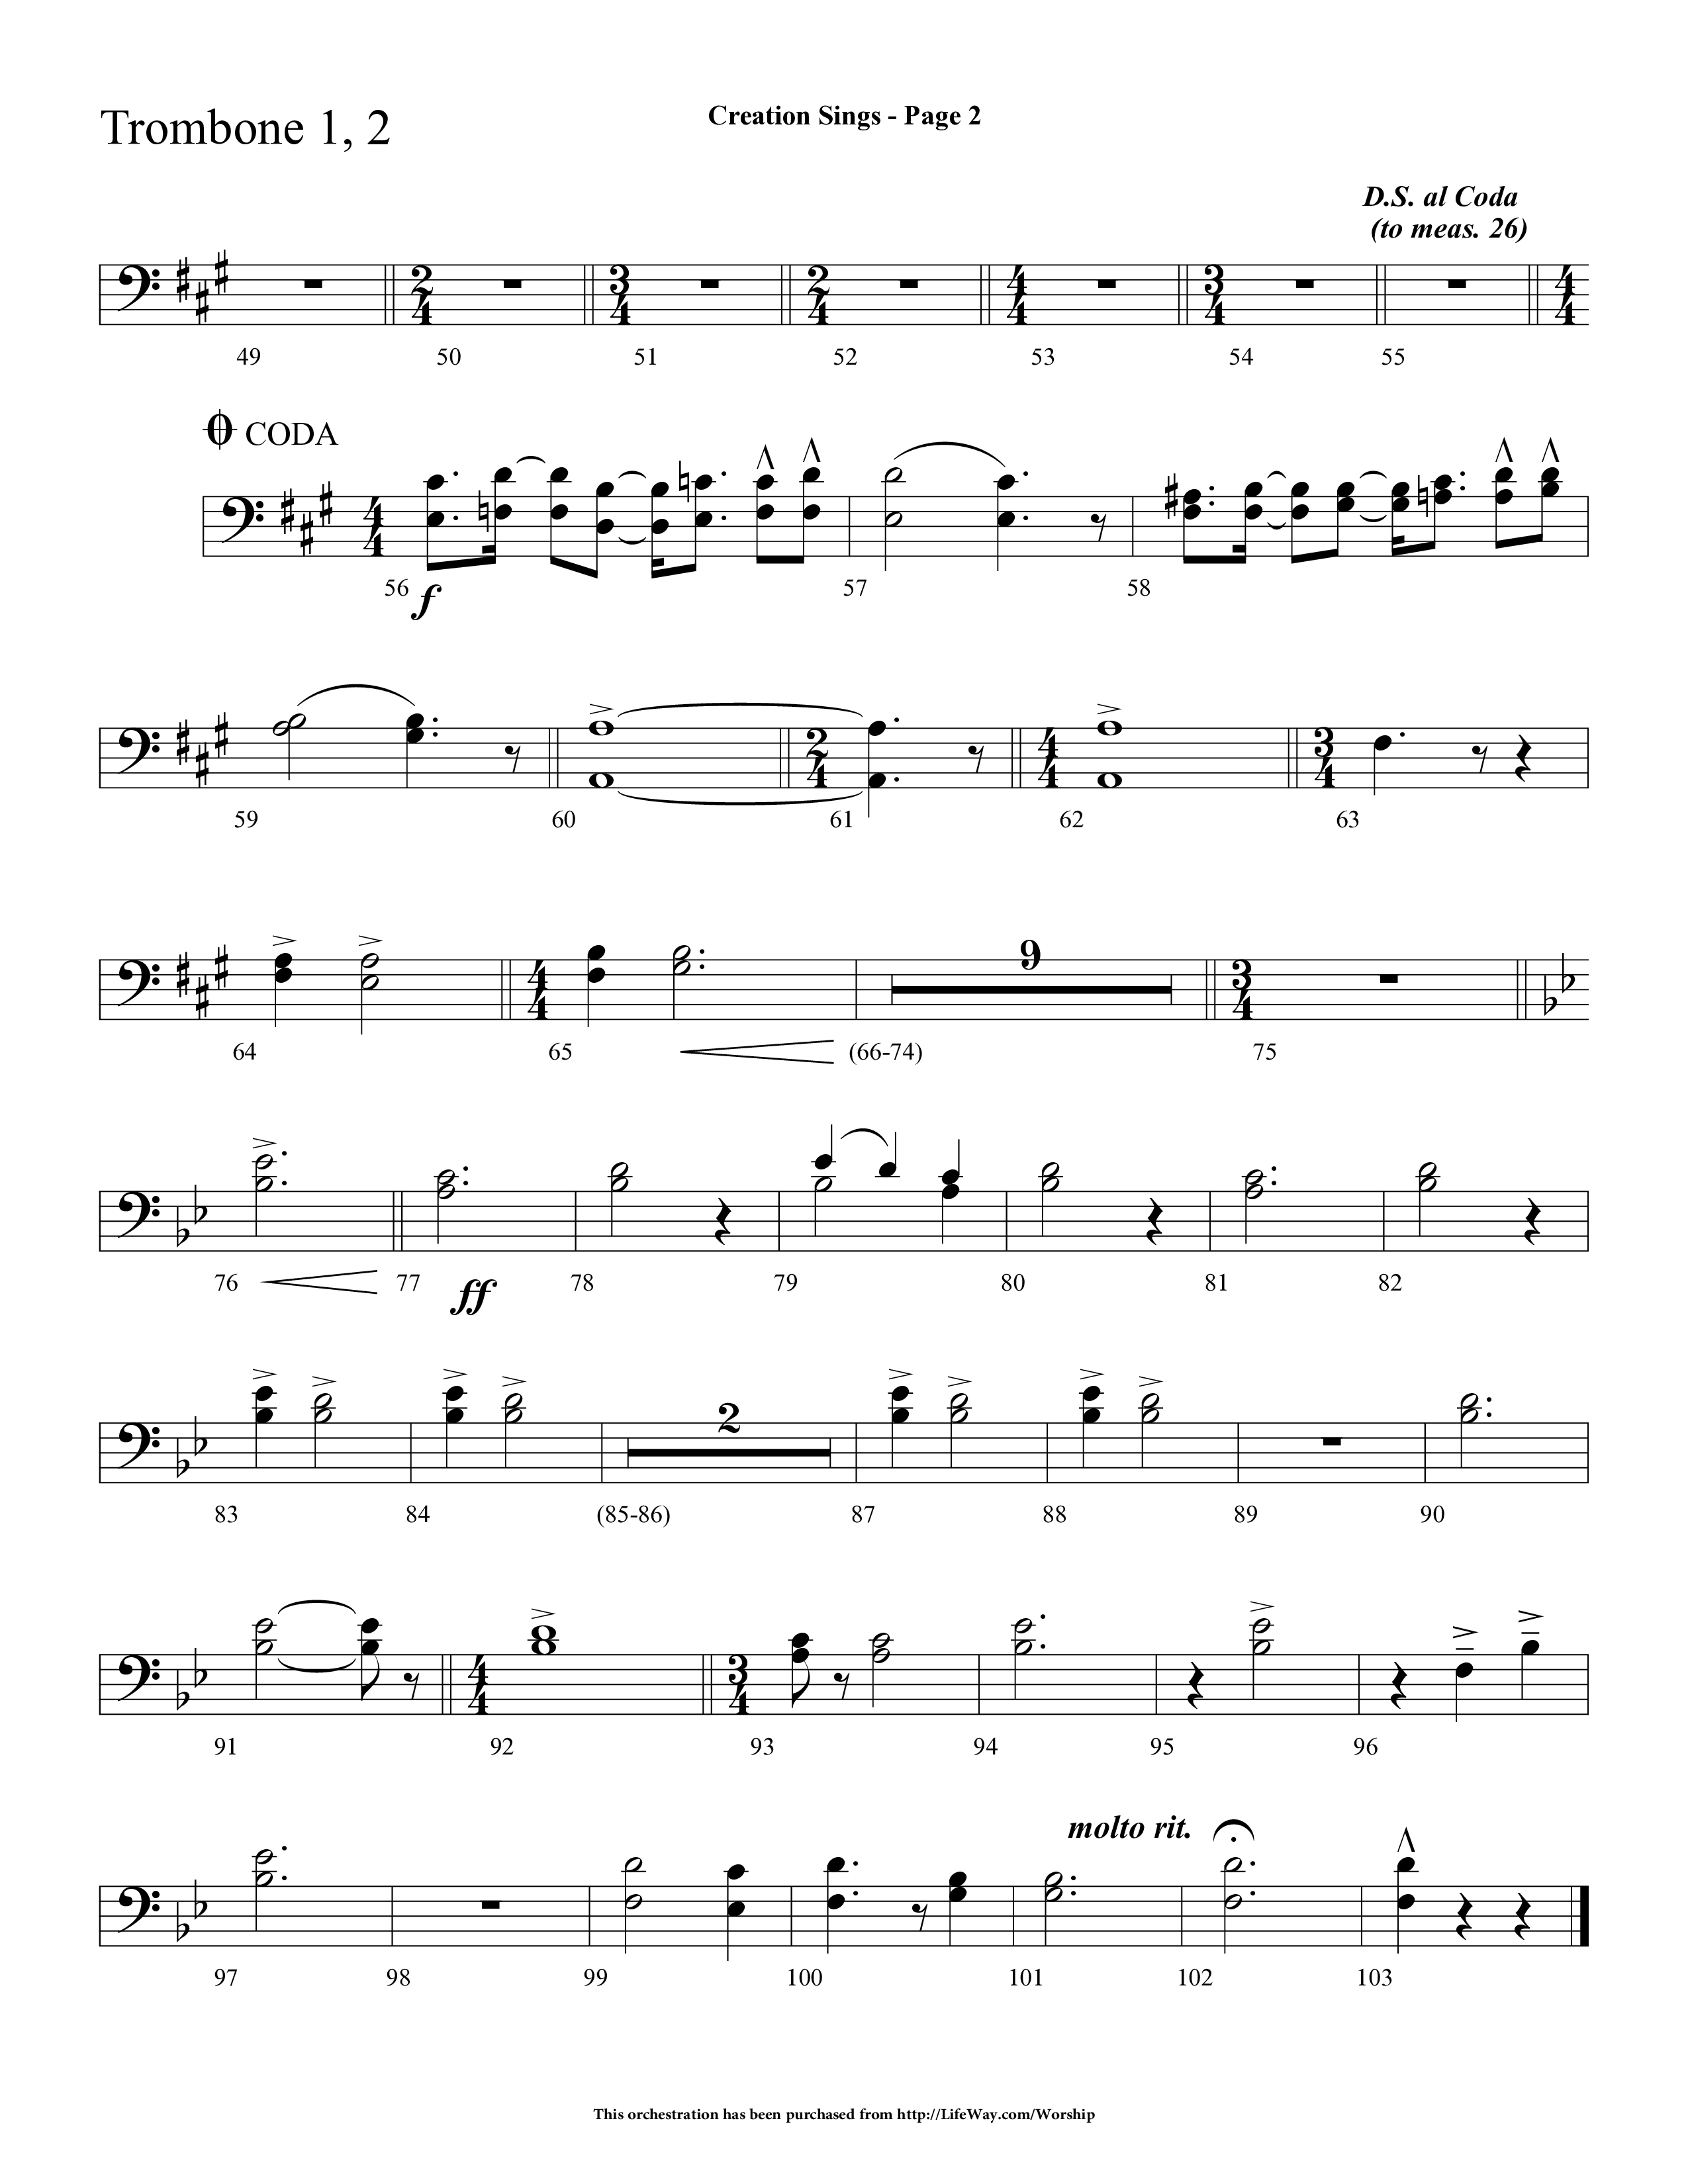 Creation Sings (Choral Anthem SATB) Trombone 1/2 (Lifeway Choral / Arr. Dave Williamson)